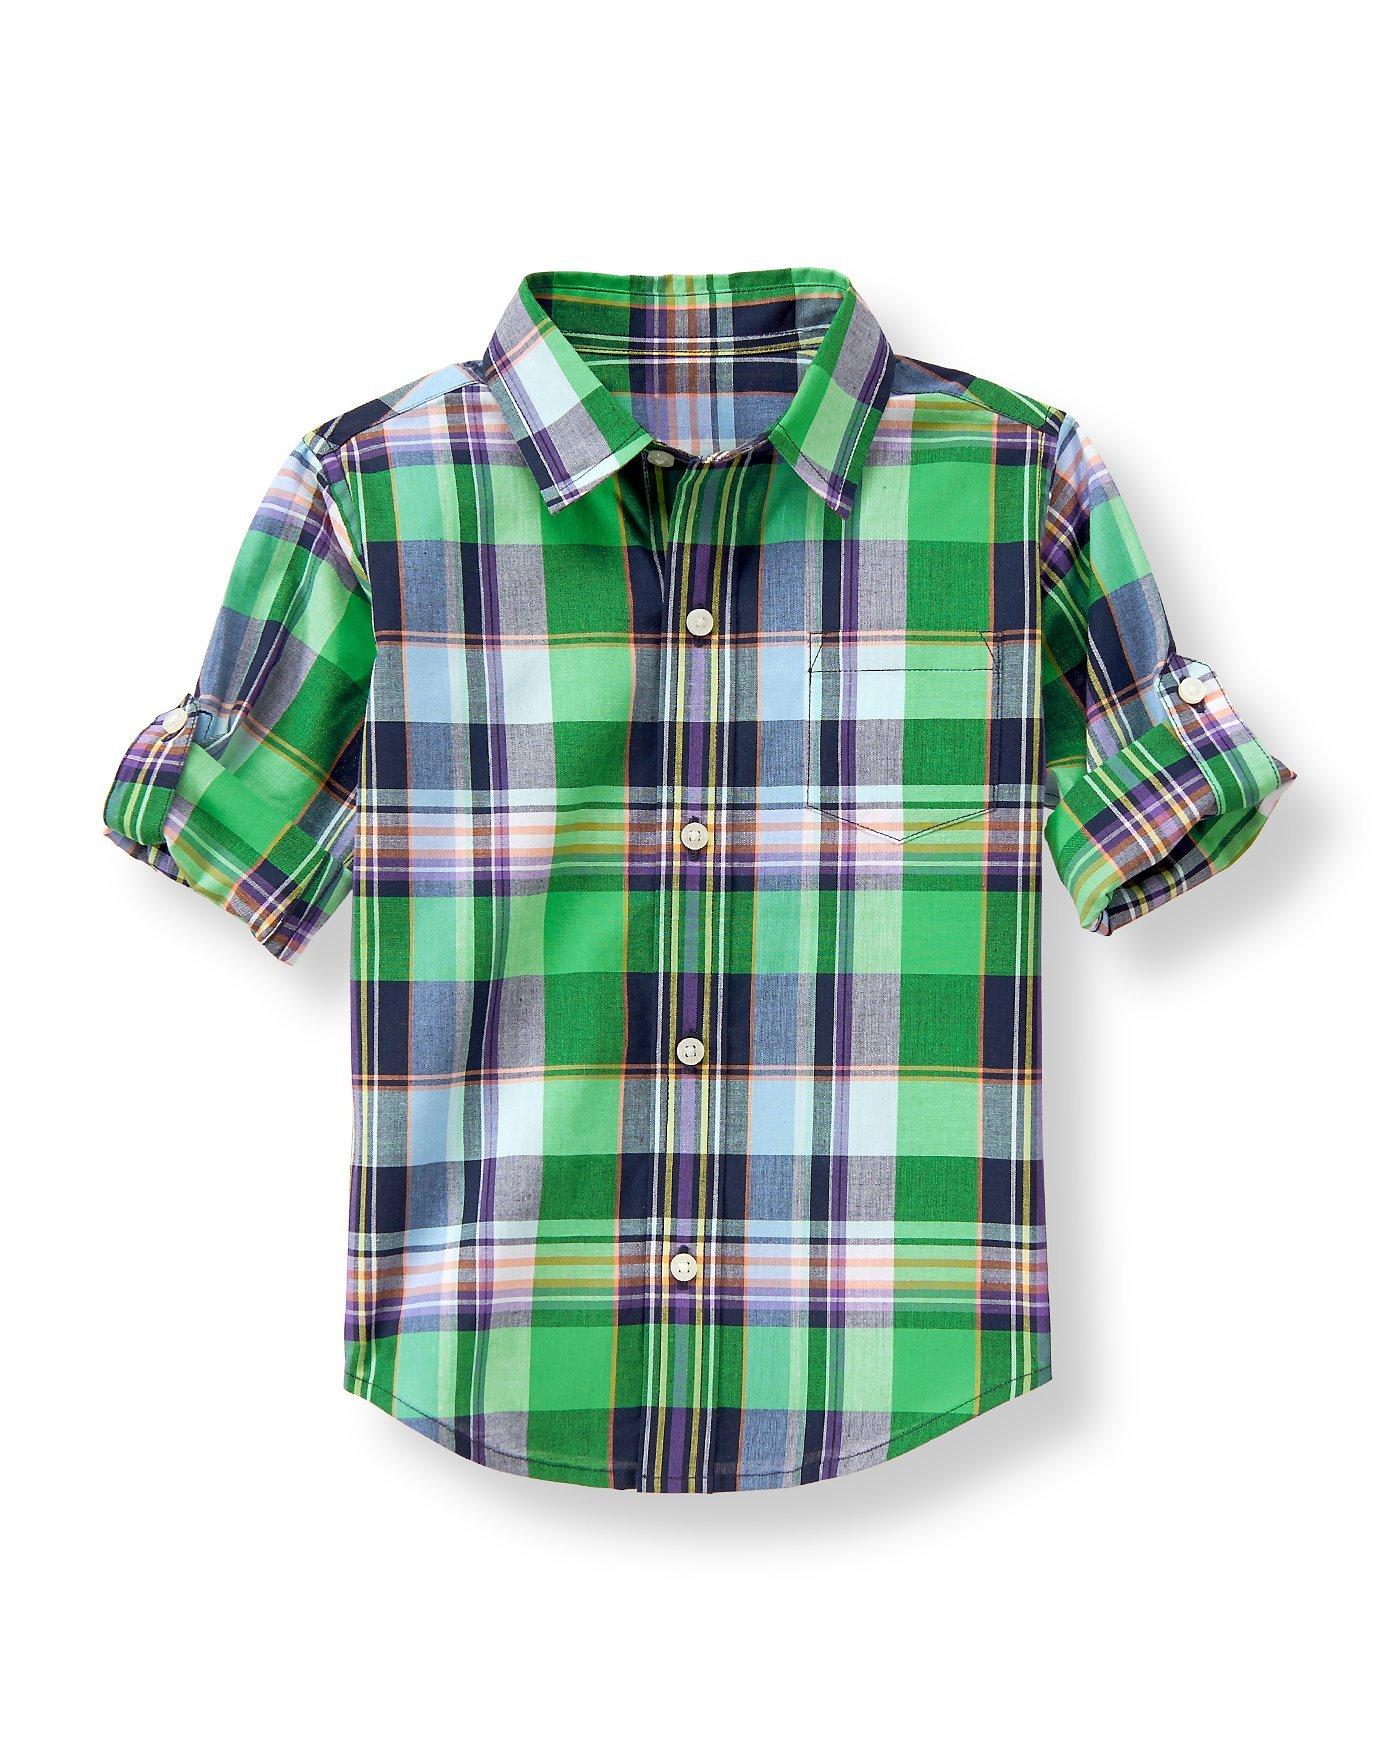 Boy Meadow Green Plaid Roll-Cuff Madras Shirt by Janie and Jack